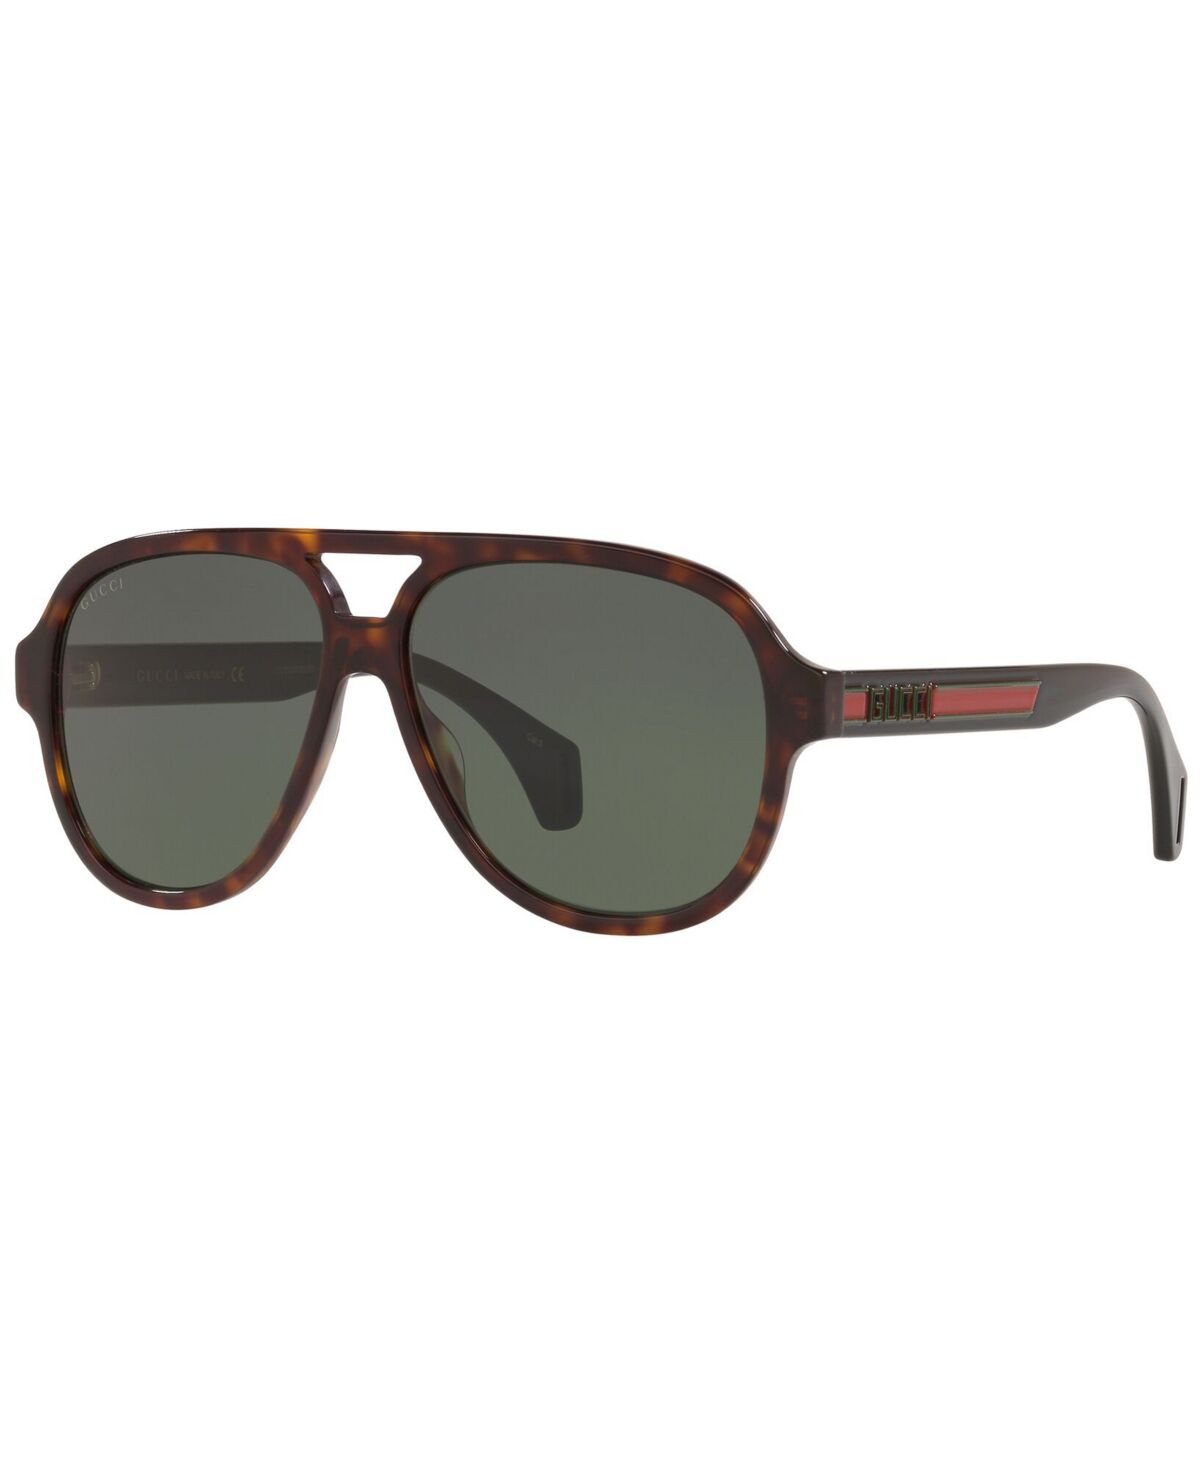 Gucci Sunglasses, GG0463S 58 - TORTOISE/GREEN